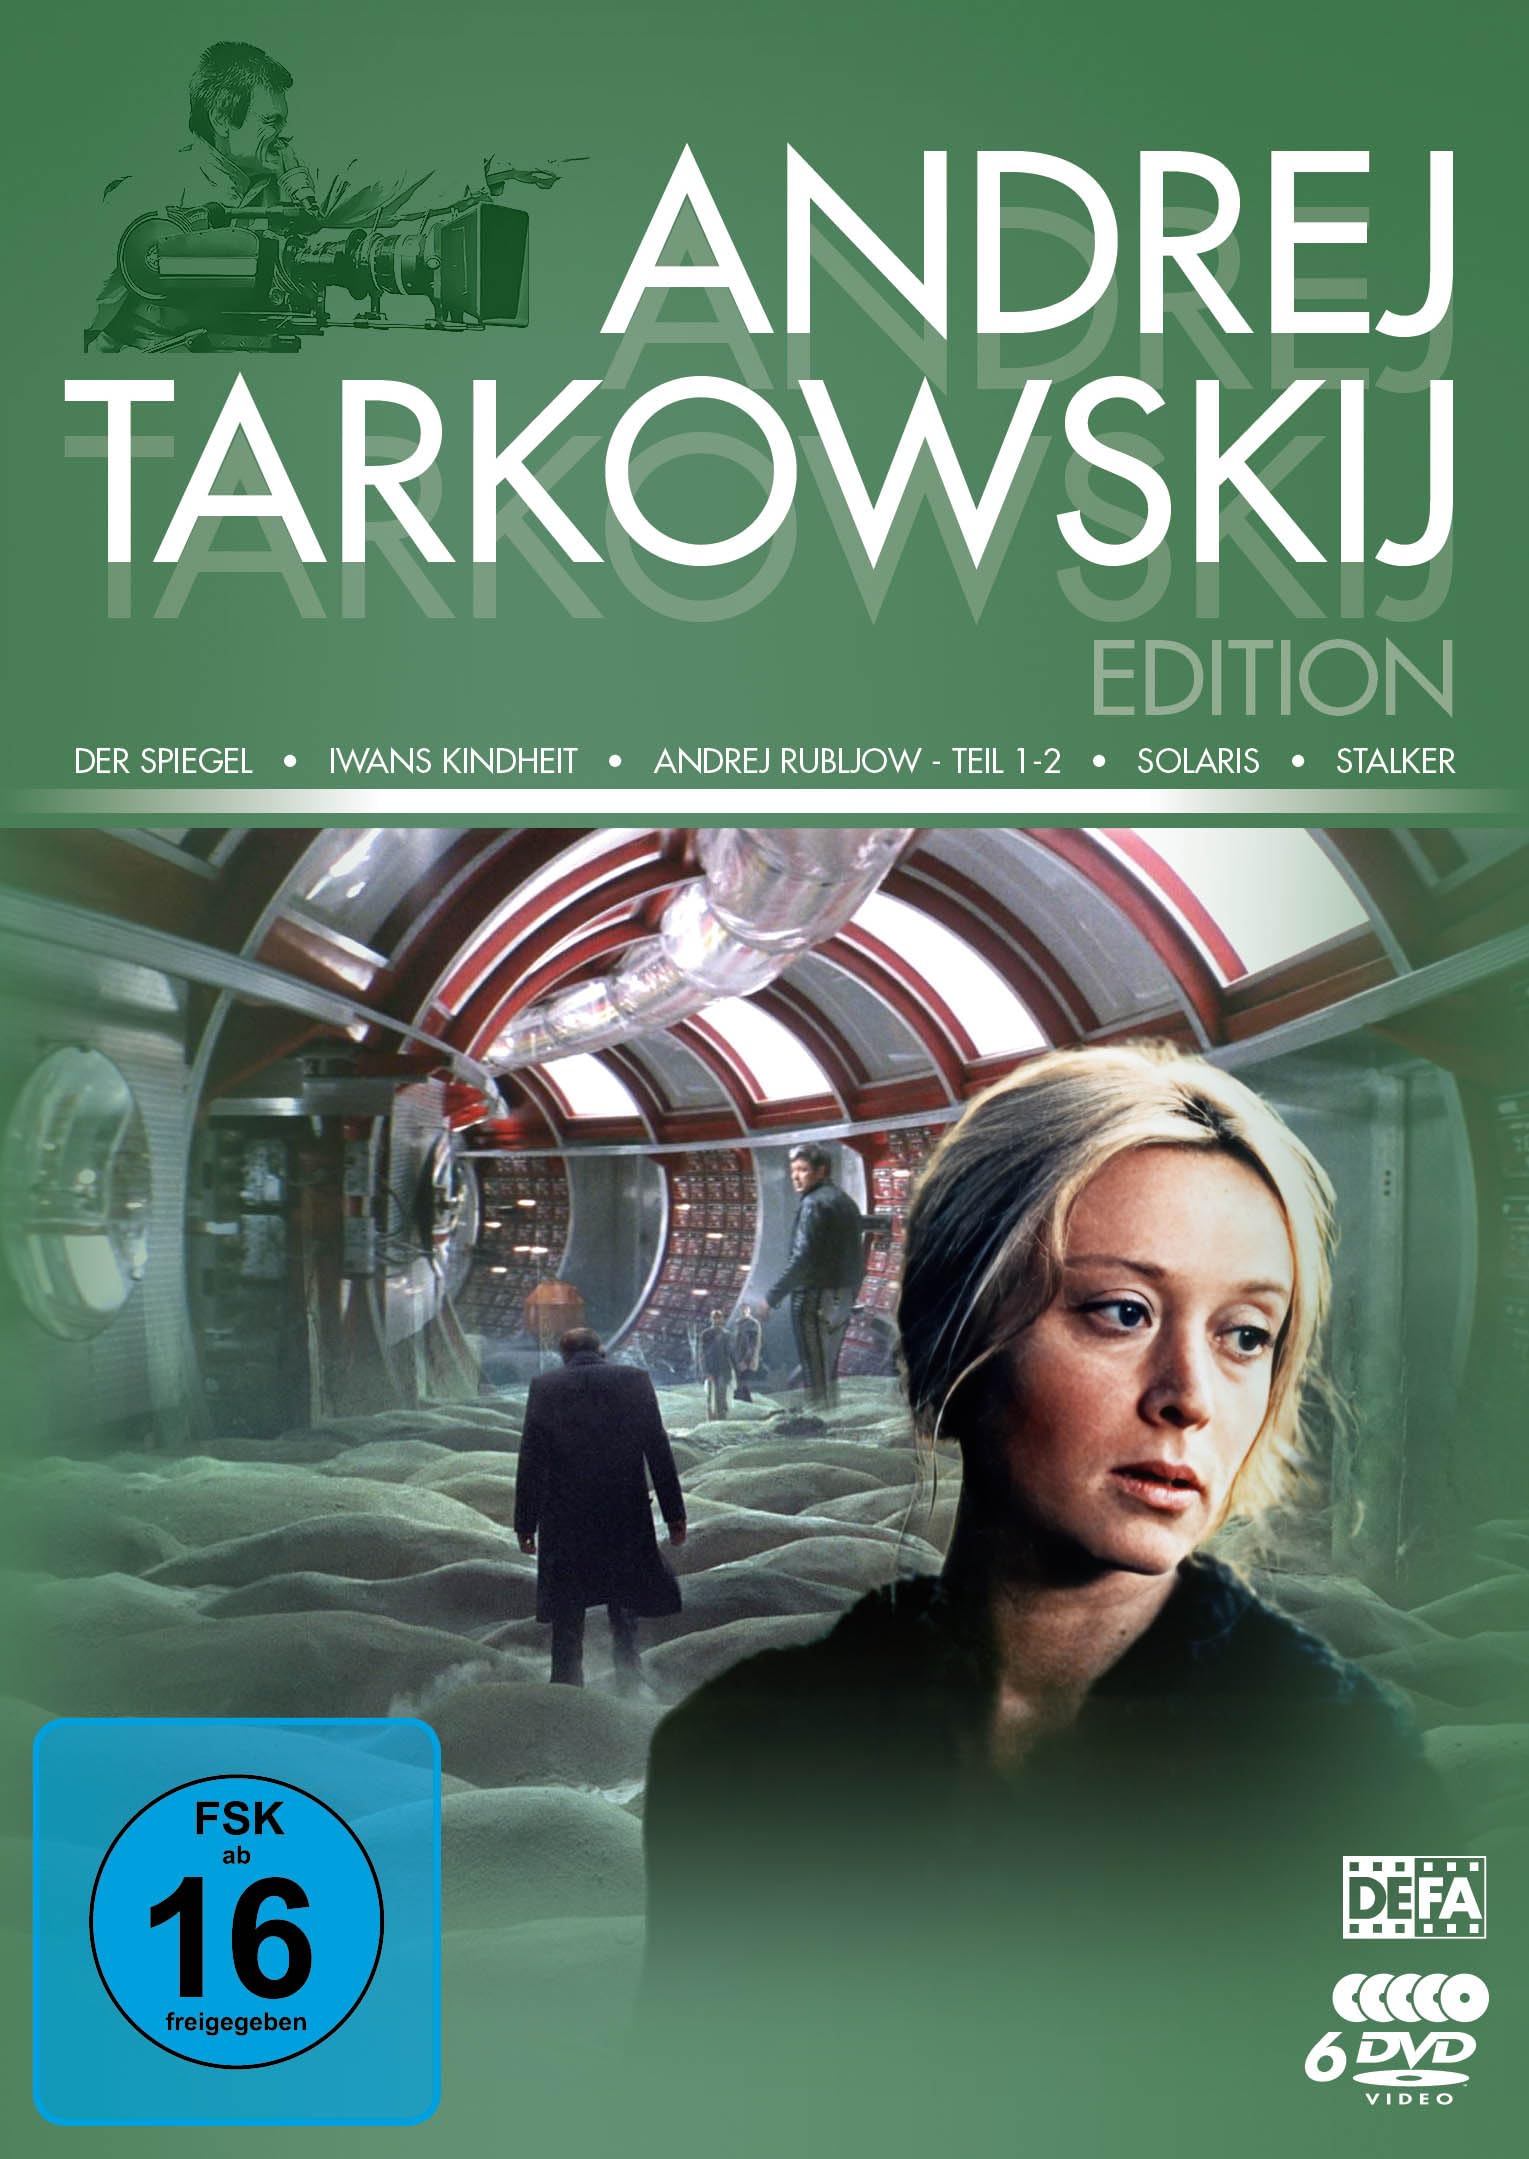 Andrej Tarkowskij Edition: Solaris, Stalker, Andrej Rubljow 1-2, Der Spiegel, Iwans Kindheit (DEFA Filmjuwelen) [6 DVDs]